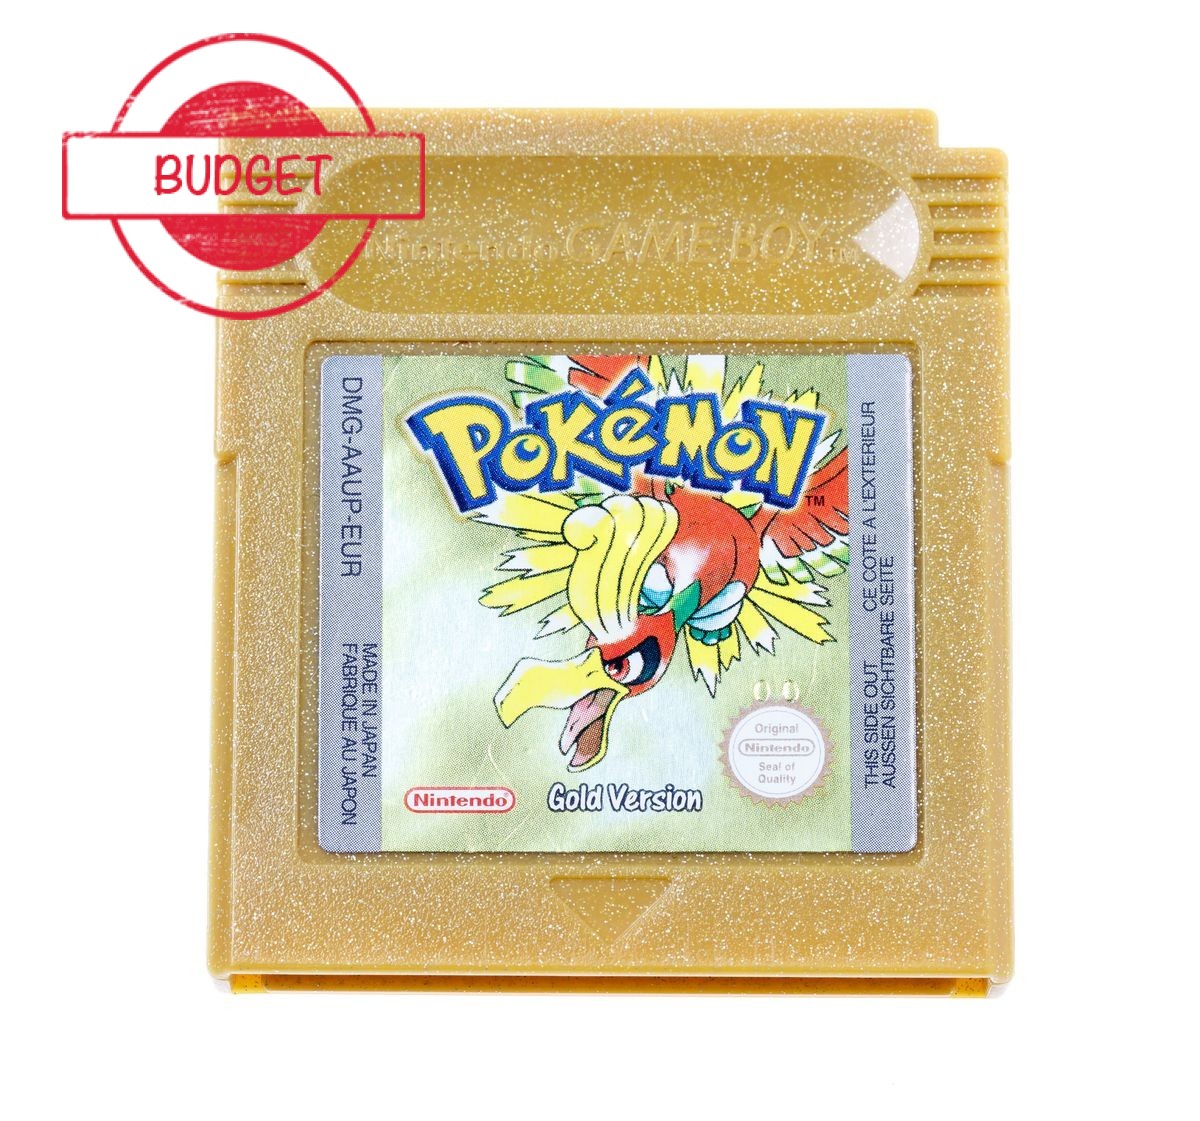 Pokemon Gold (German) - Budget Kopen | Gameboy Color Games